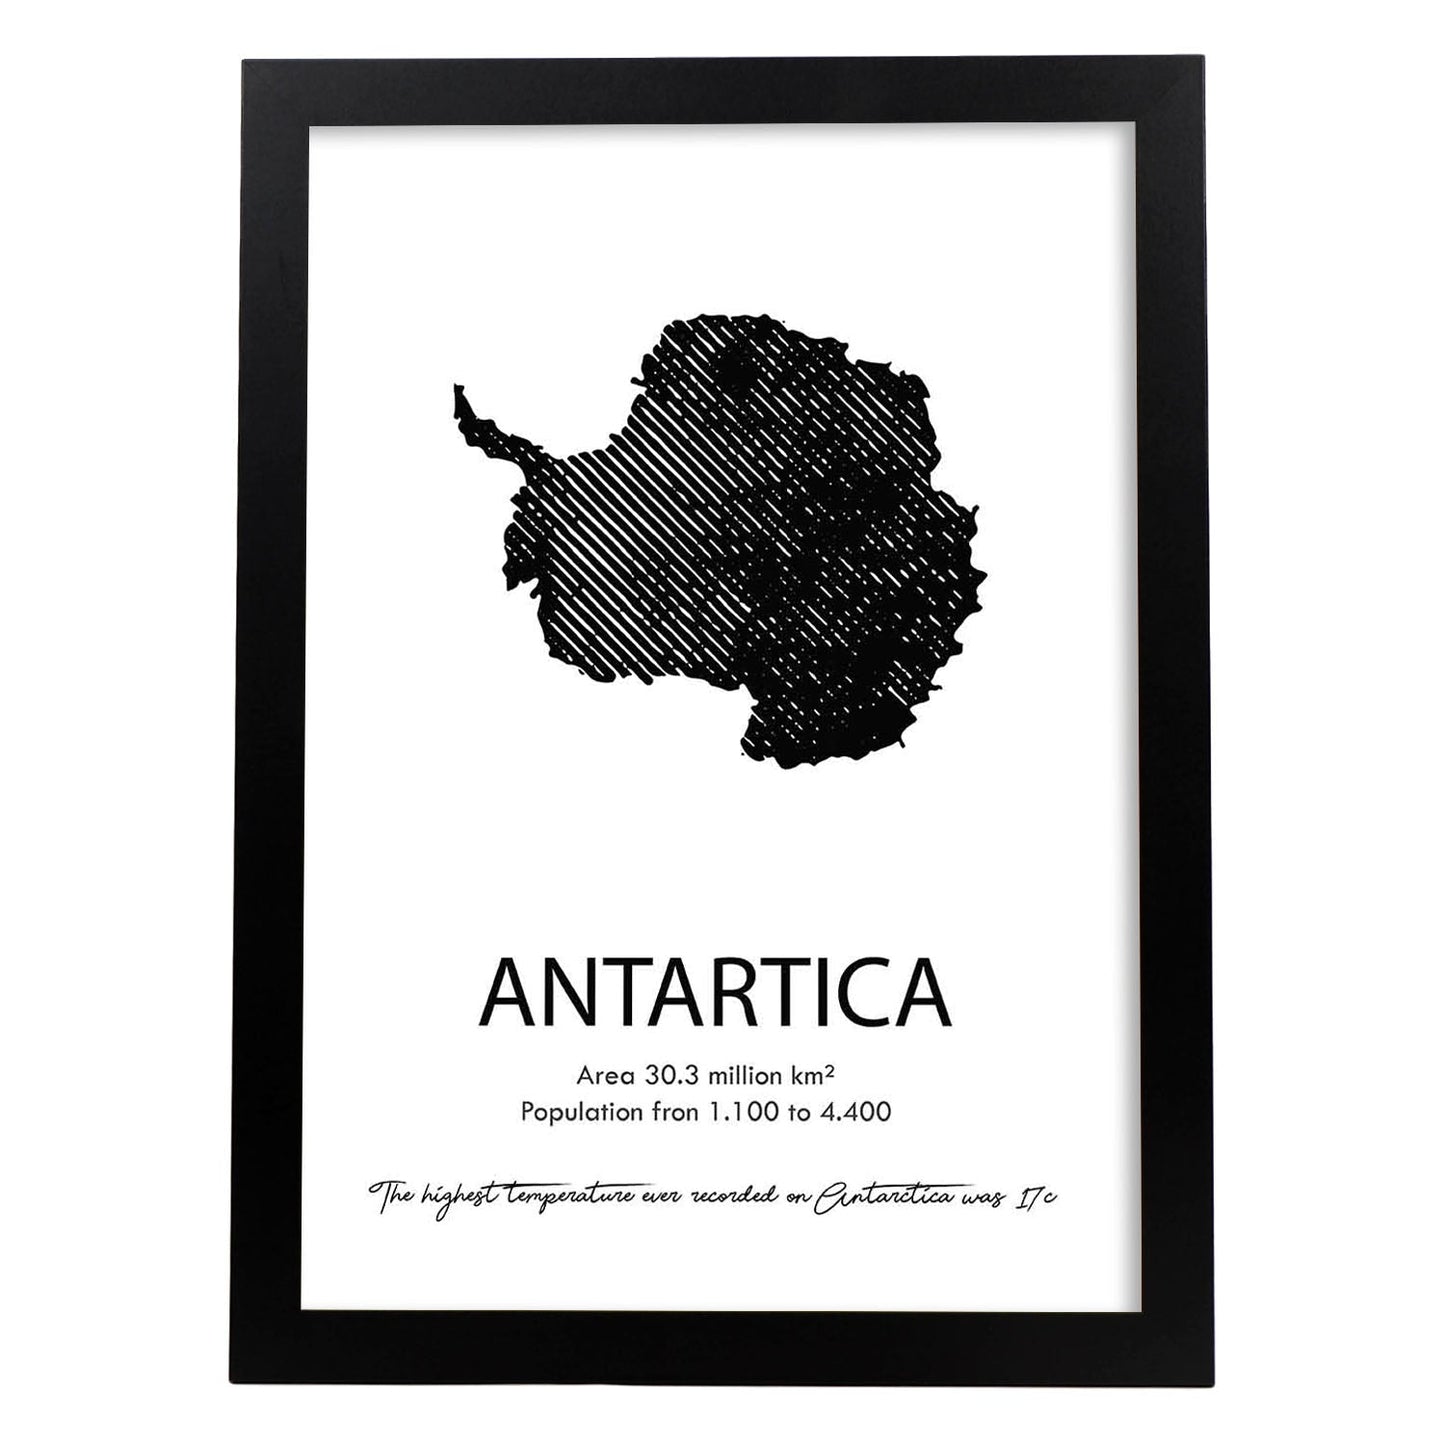 Poster de Antartida. Láminas de paises y continentes del mundo.-Artwork-Nacnic-A3-Marco Negro-Nacnic Estudio SL